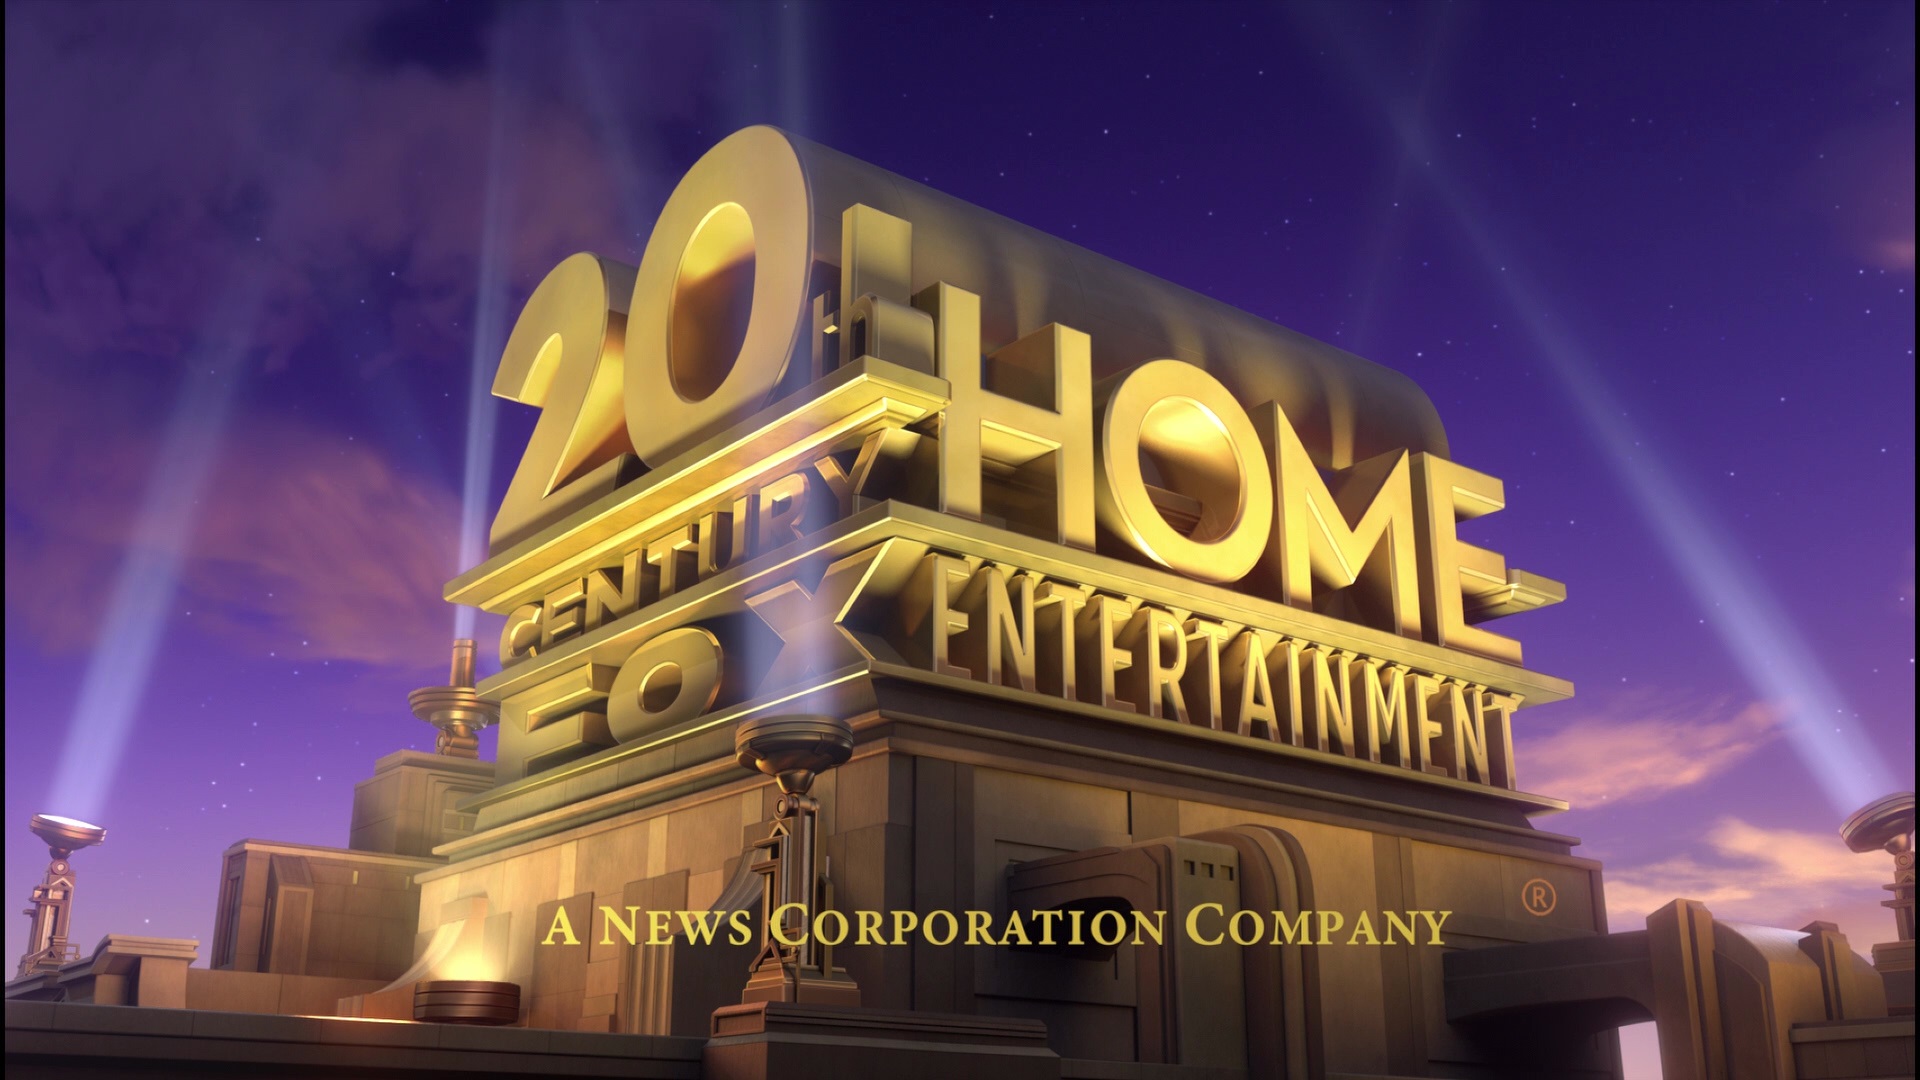 20th Century Fox Home Entertainment1366 x 768